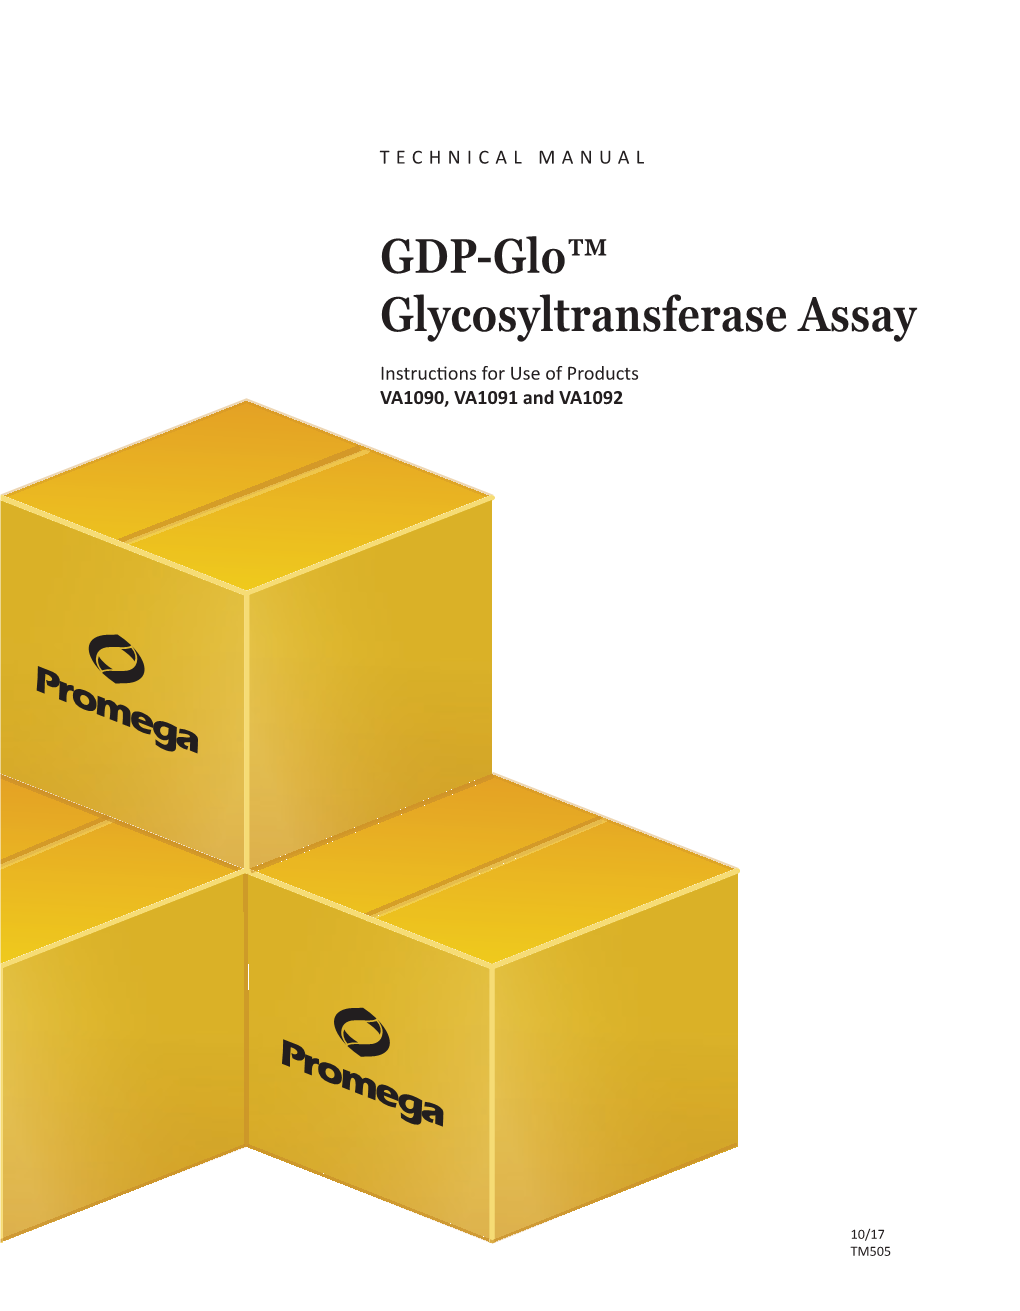 GDP-Glo™ Glycosyltransferase Assay Instructions for Use of Products VA1090, VA1091 and VA1092